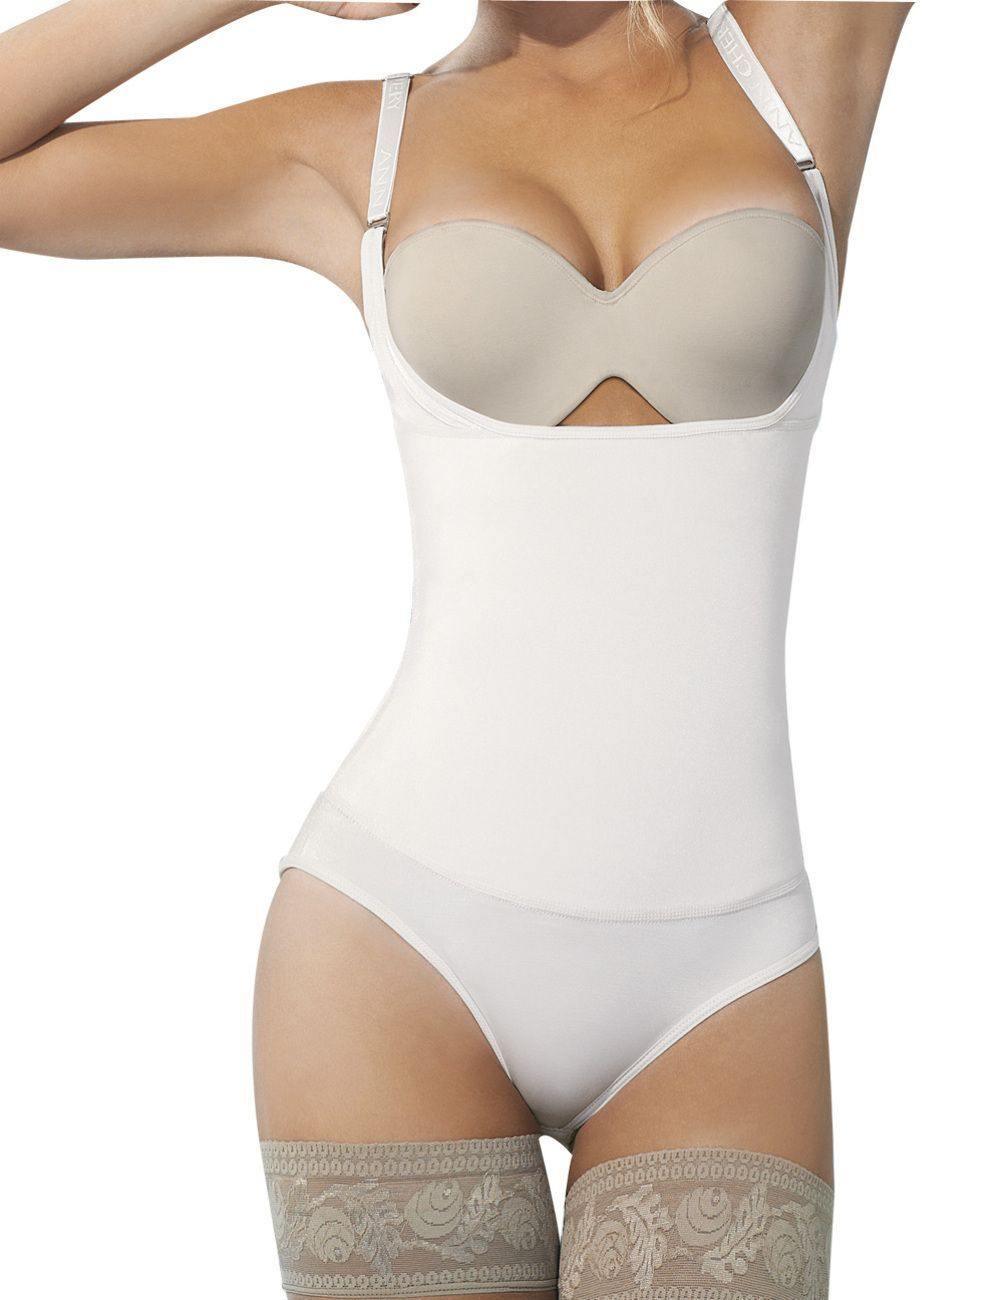 image of product,Latex Body Bikini - SEXYEONE 